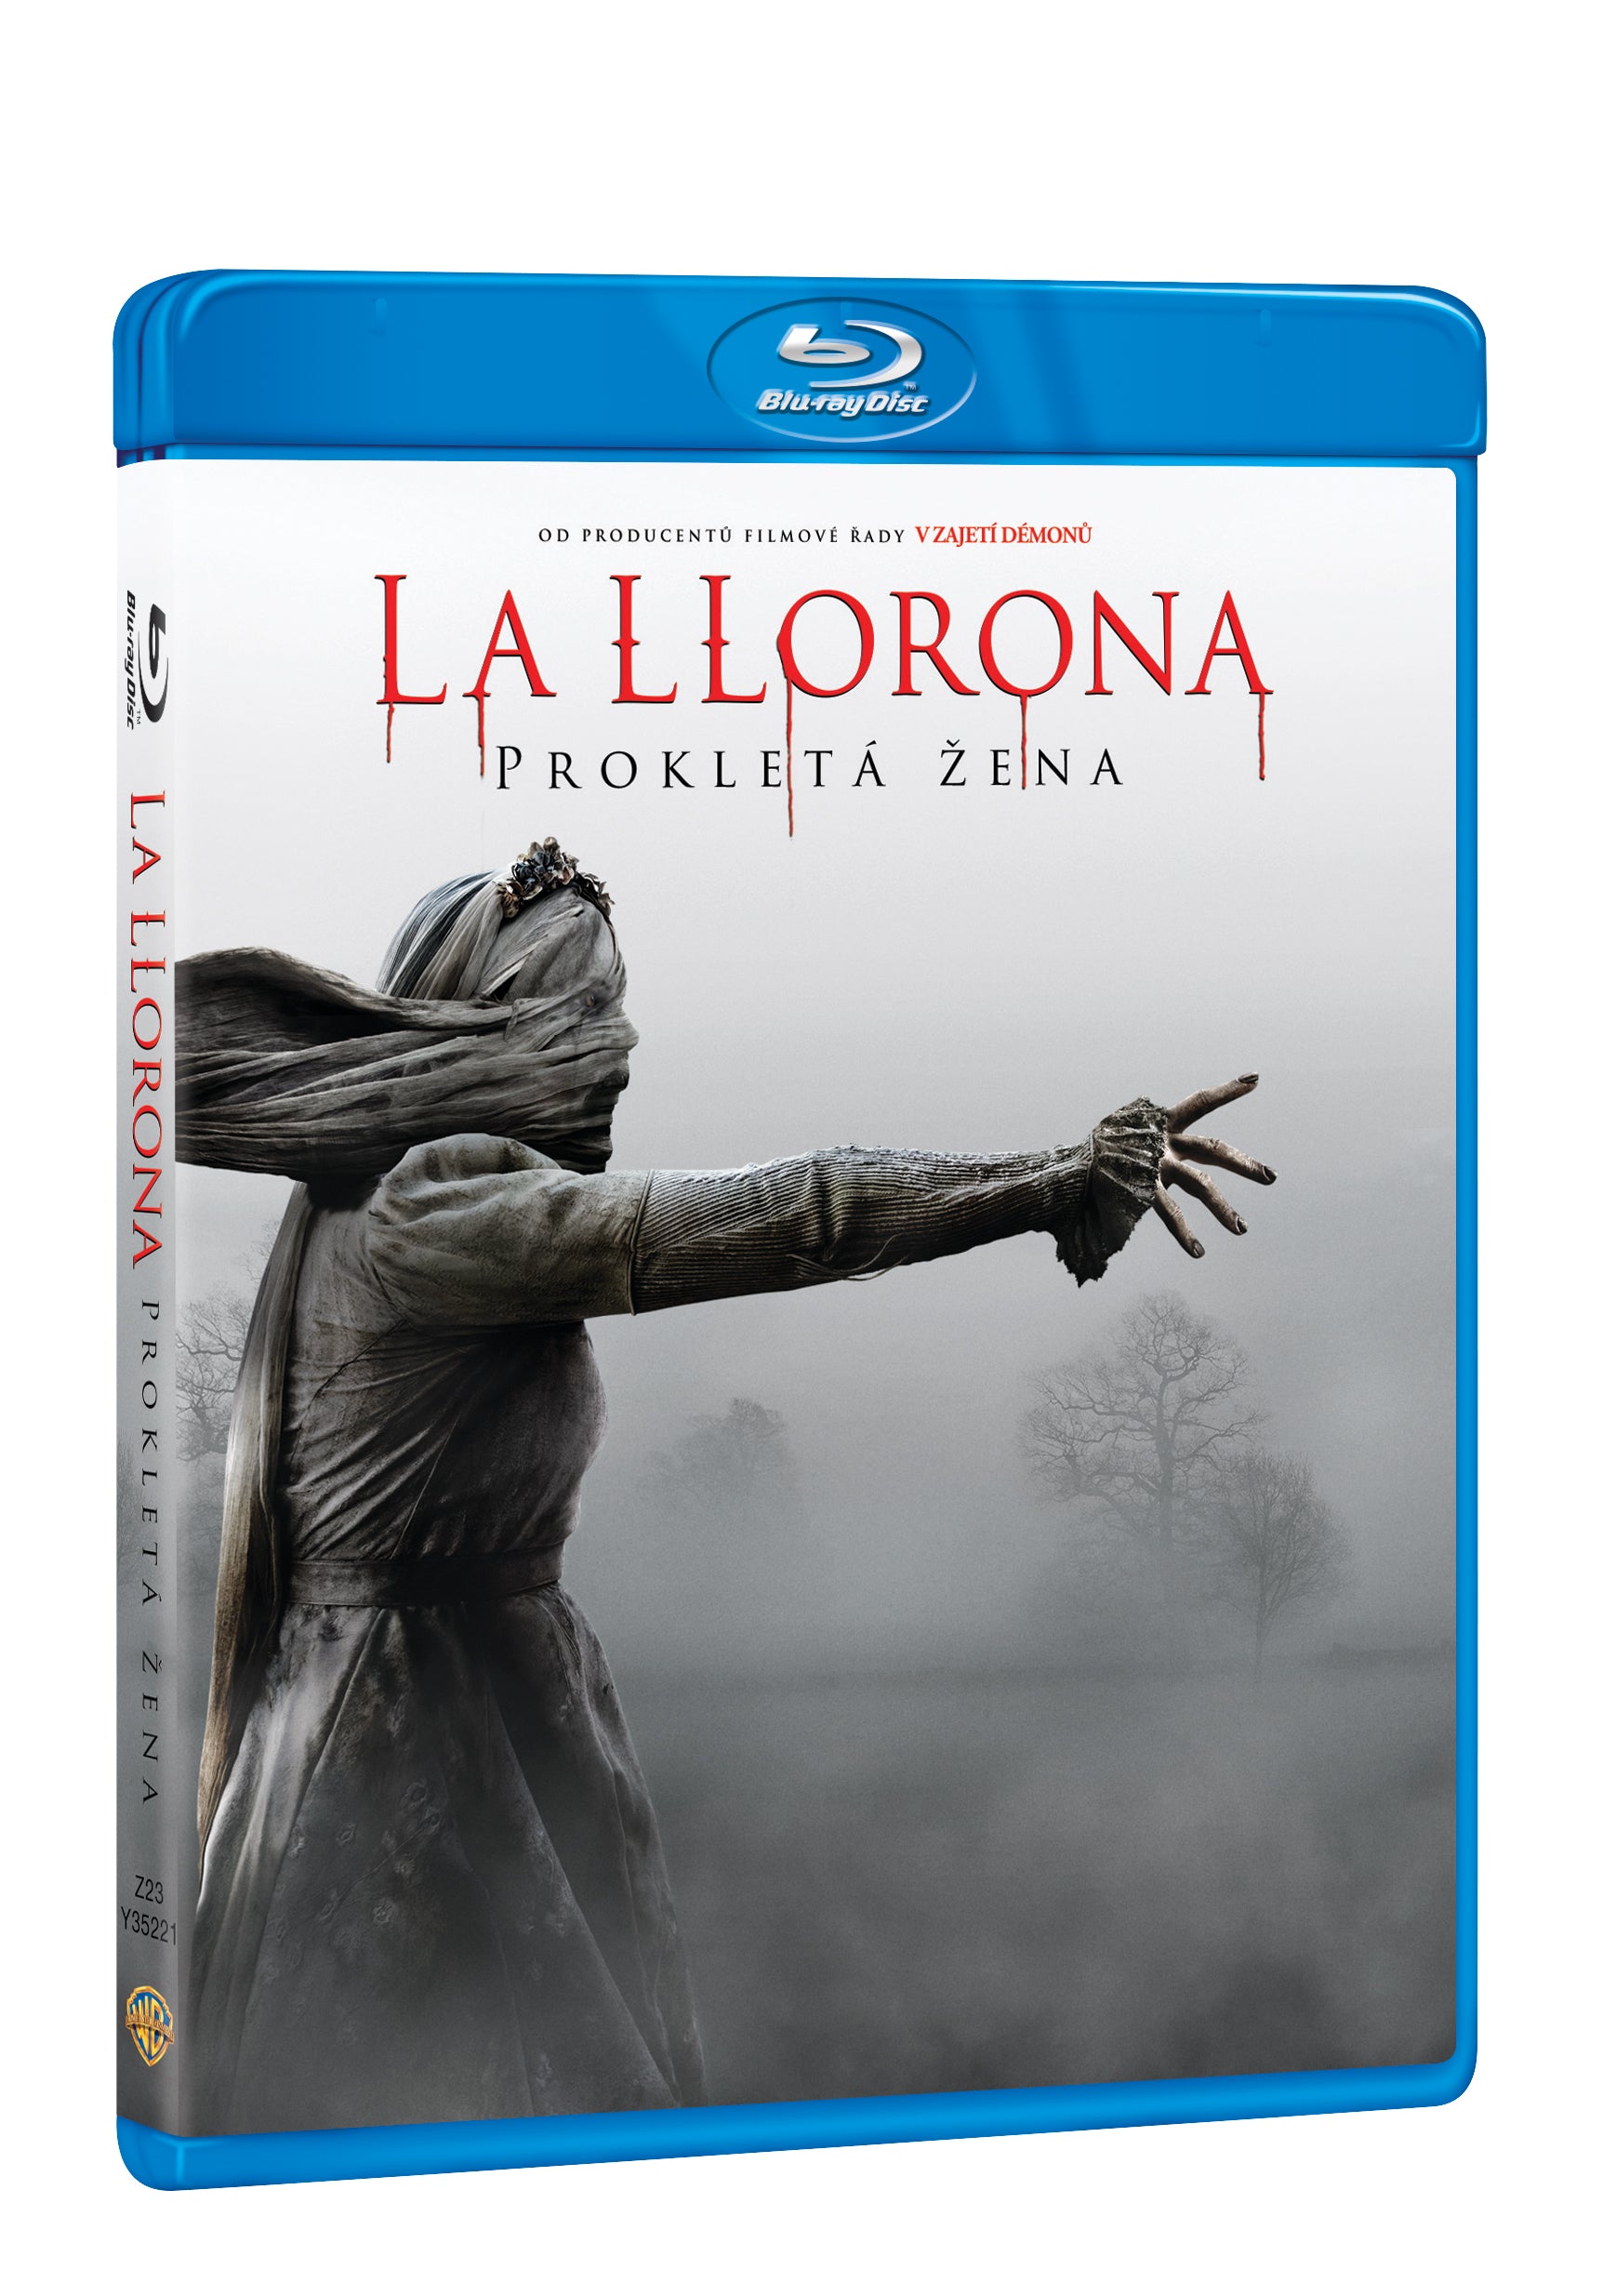 The Curse of La Llorona / The Curse of the Weeping Woman / La Llorona: Prokleta zena - Czech version